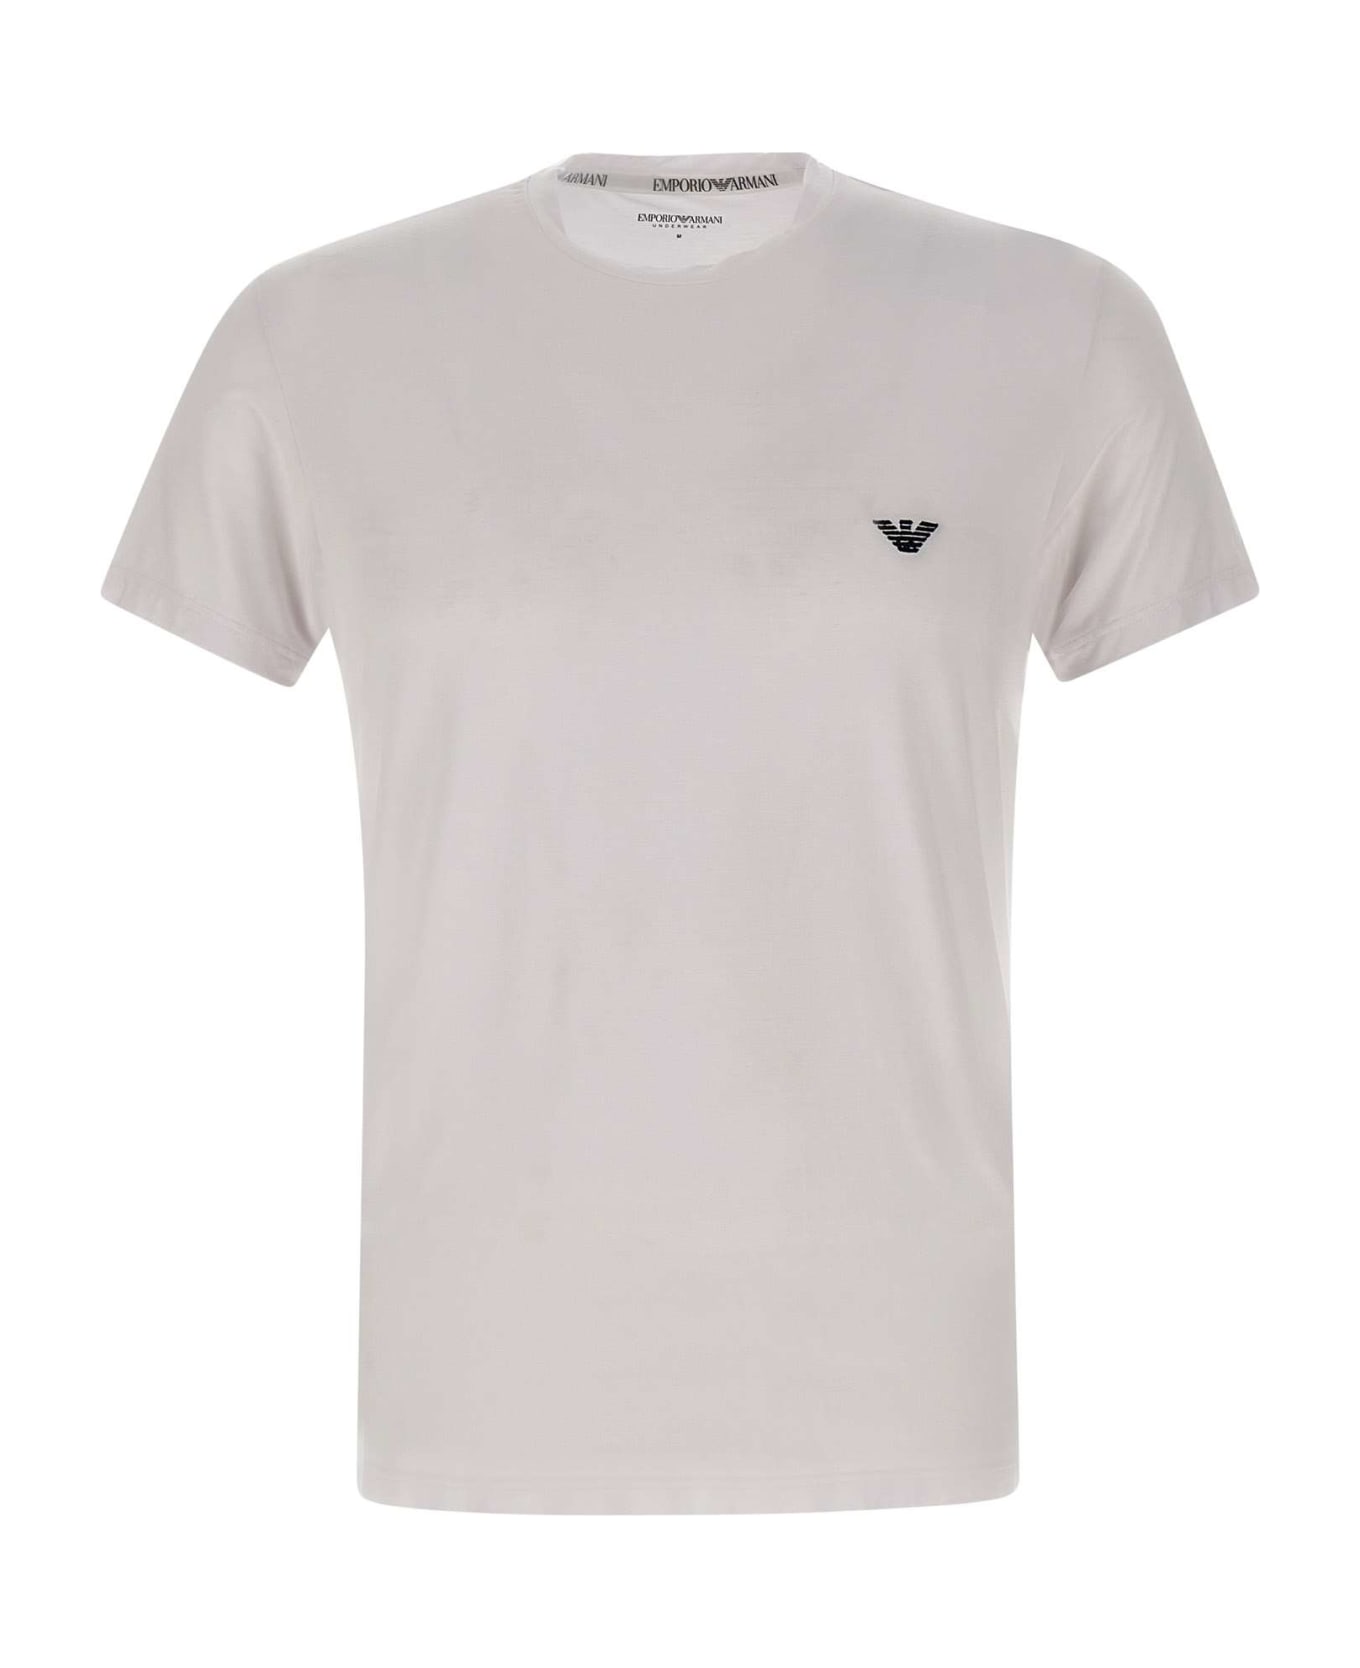 Emporio Armani Modal T-shirt - WHITE シャツ